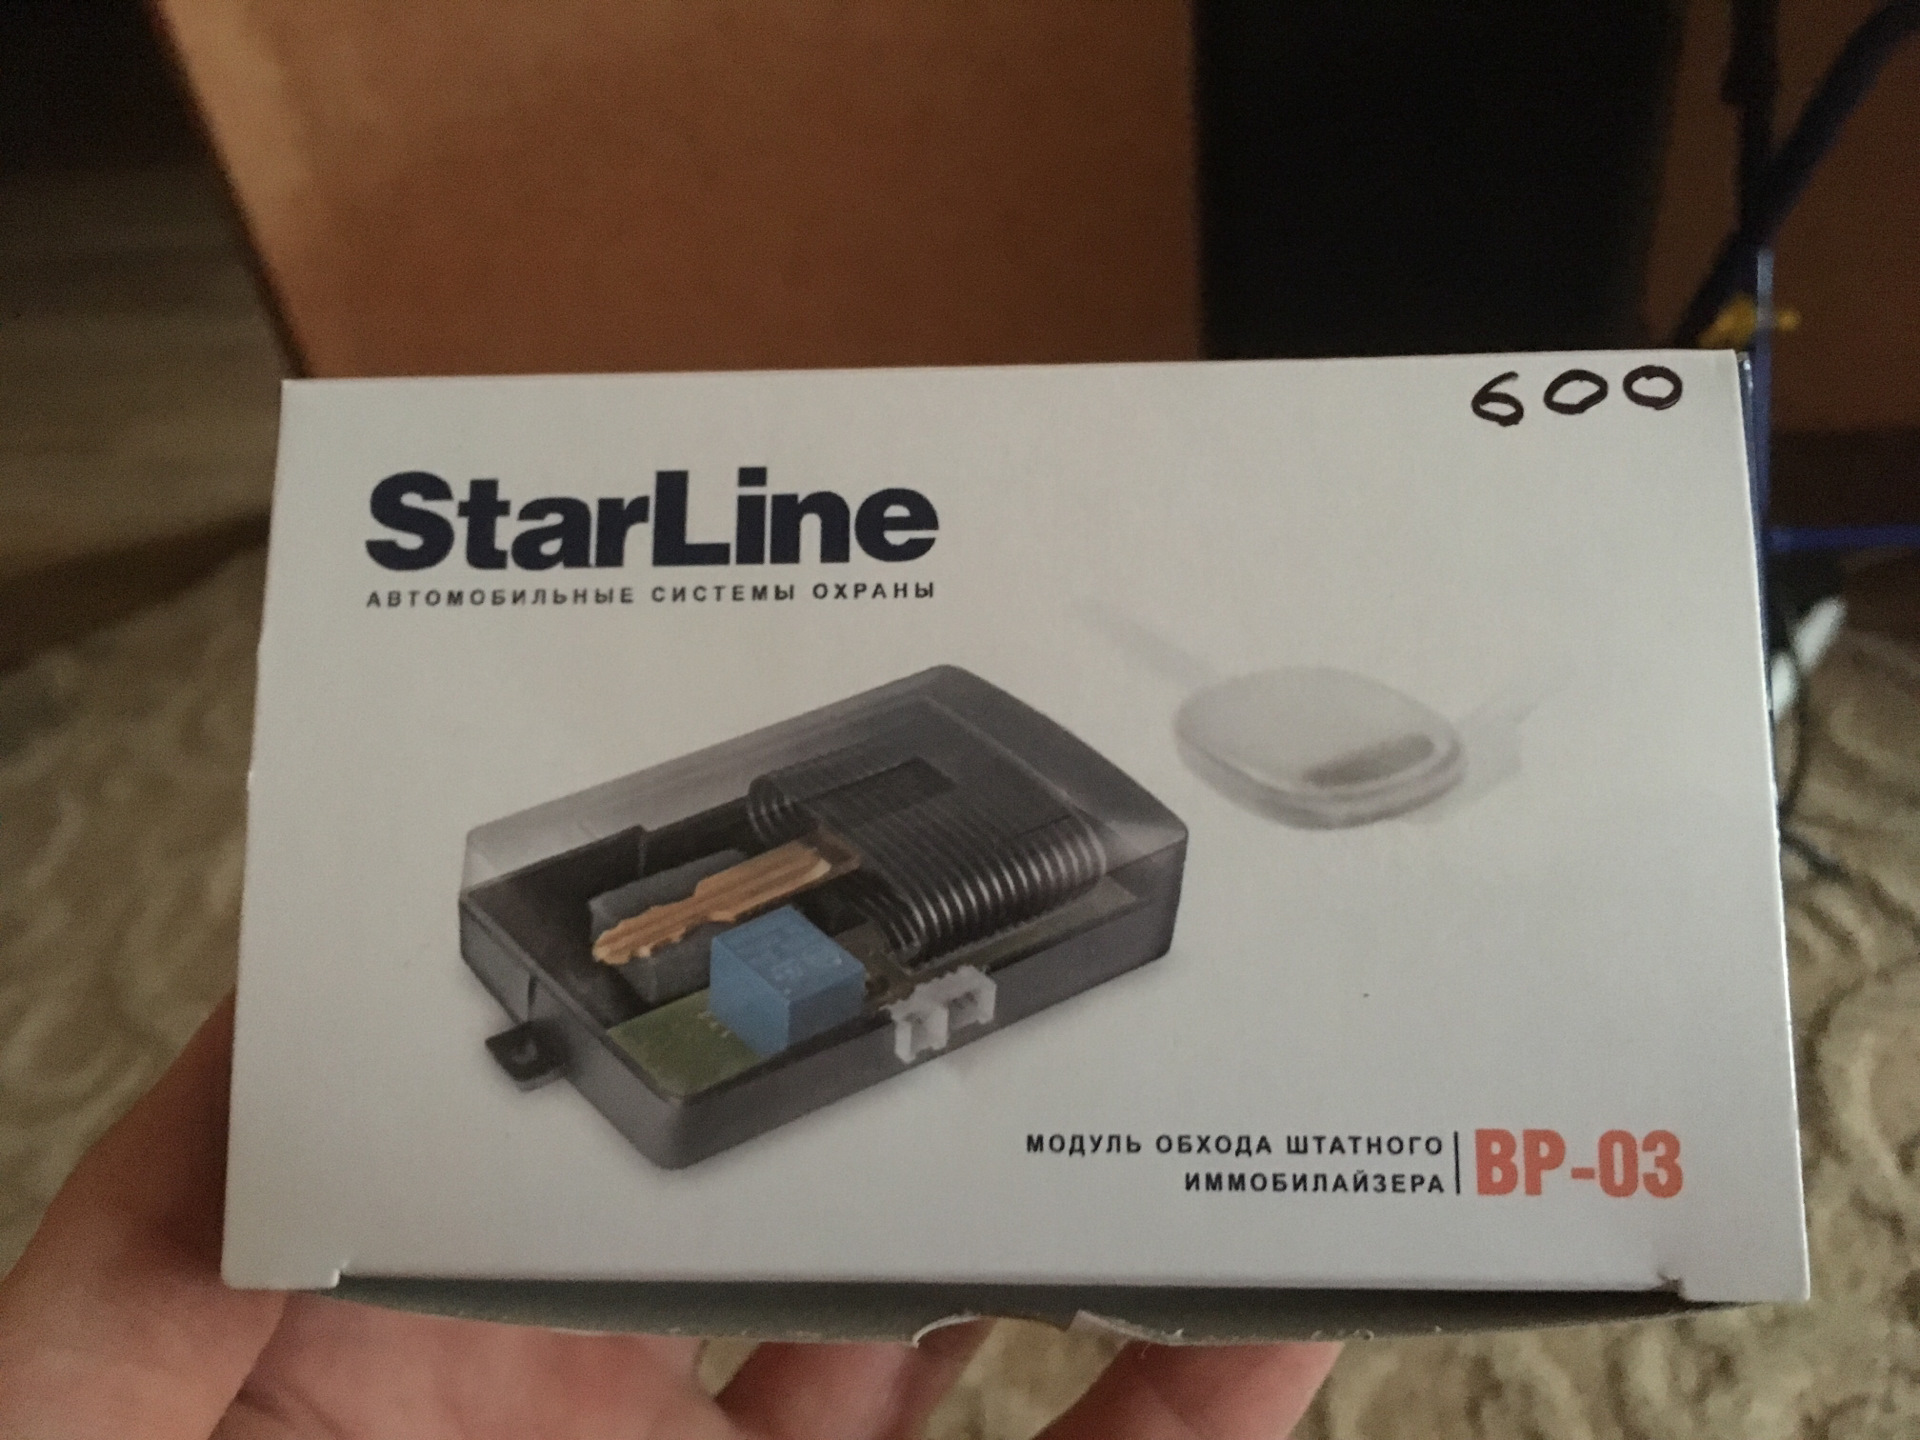 Обход иммобилайзера starline. Модуль обхода штатного иммобилайзера STARLINE. Блок обхода иммобилайзера STARLINE a93. Модуль обхода иммобилайзера старлайн b9. Модуль обхода иммобилайзера для сигнализации STARLINE a93.